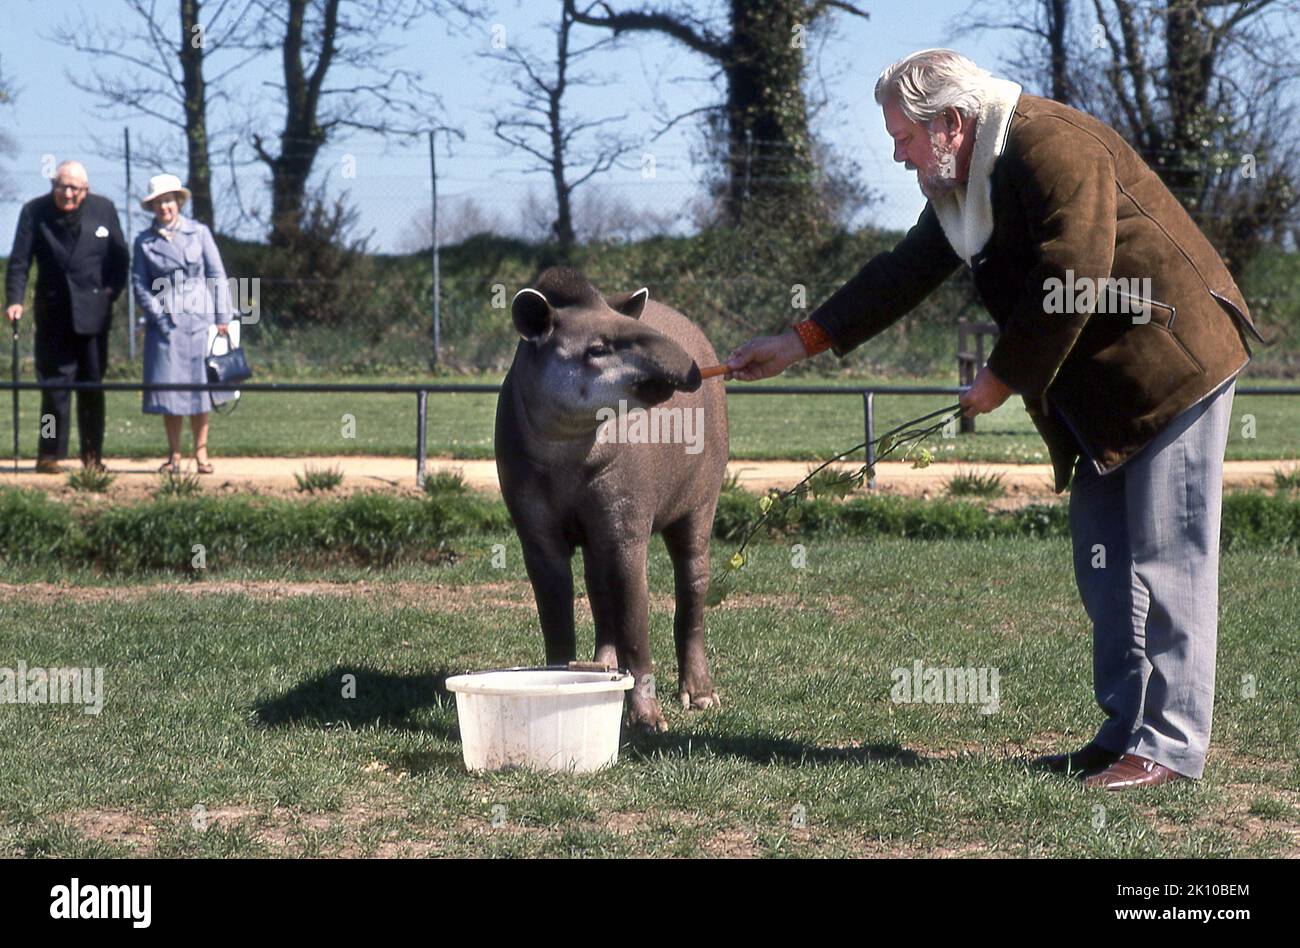 Jersey zoo gerald durrell fotografías e imágenes de alta resolución - Alamy